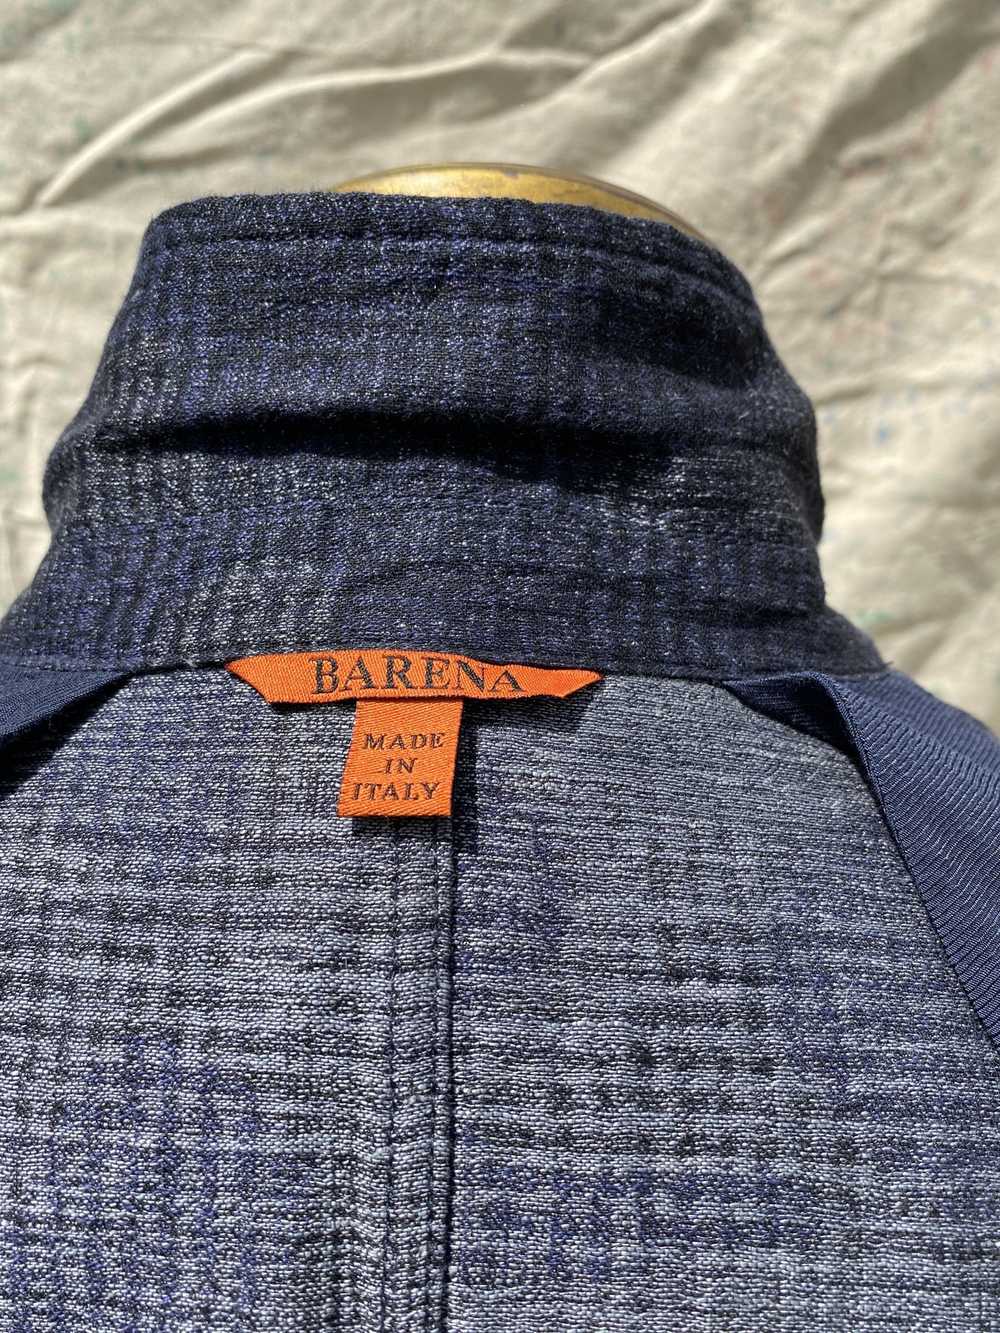 Barena Cotton/Linen Blue Pattern Sportcoat - image 3